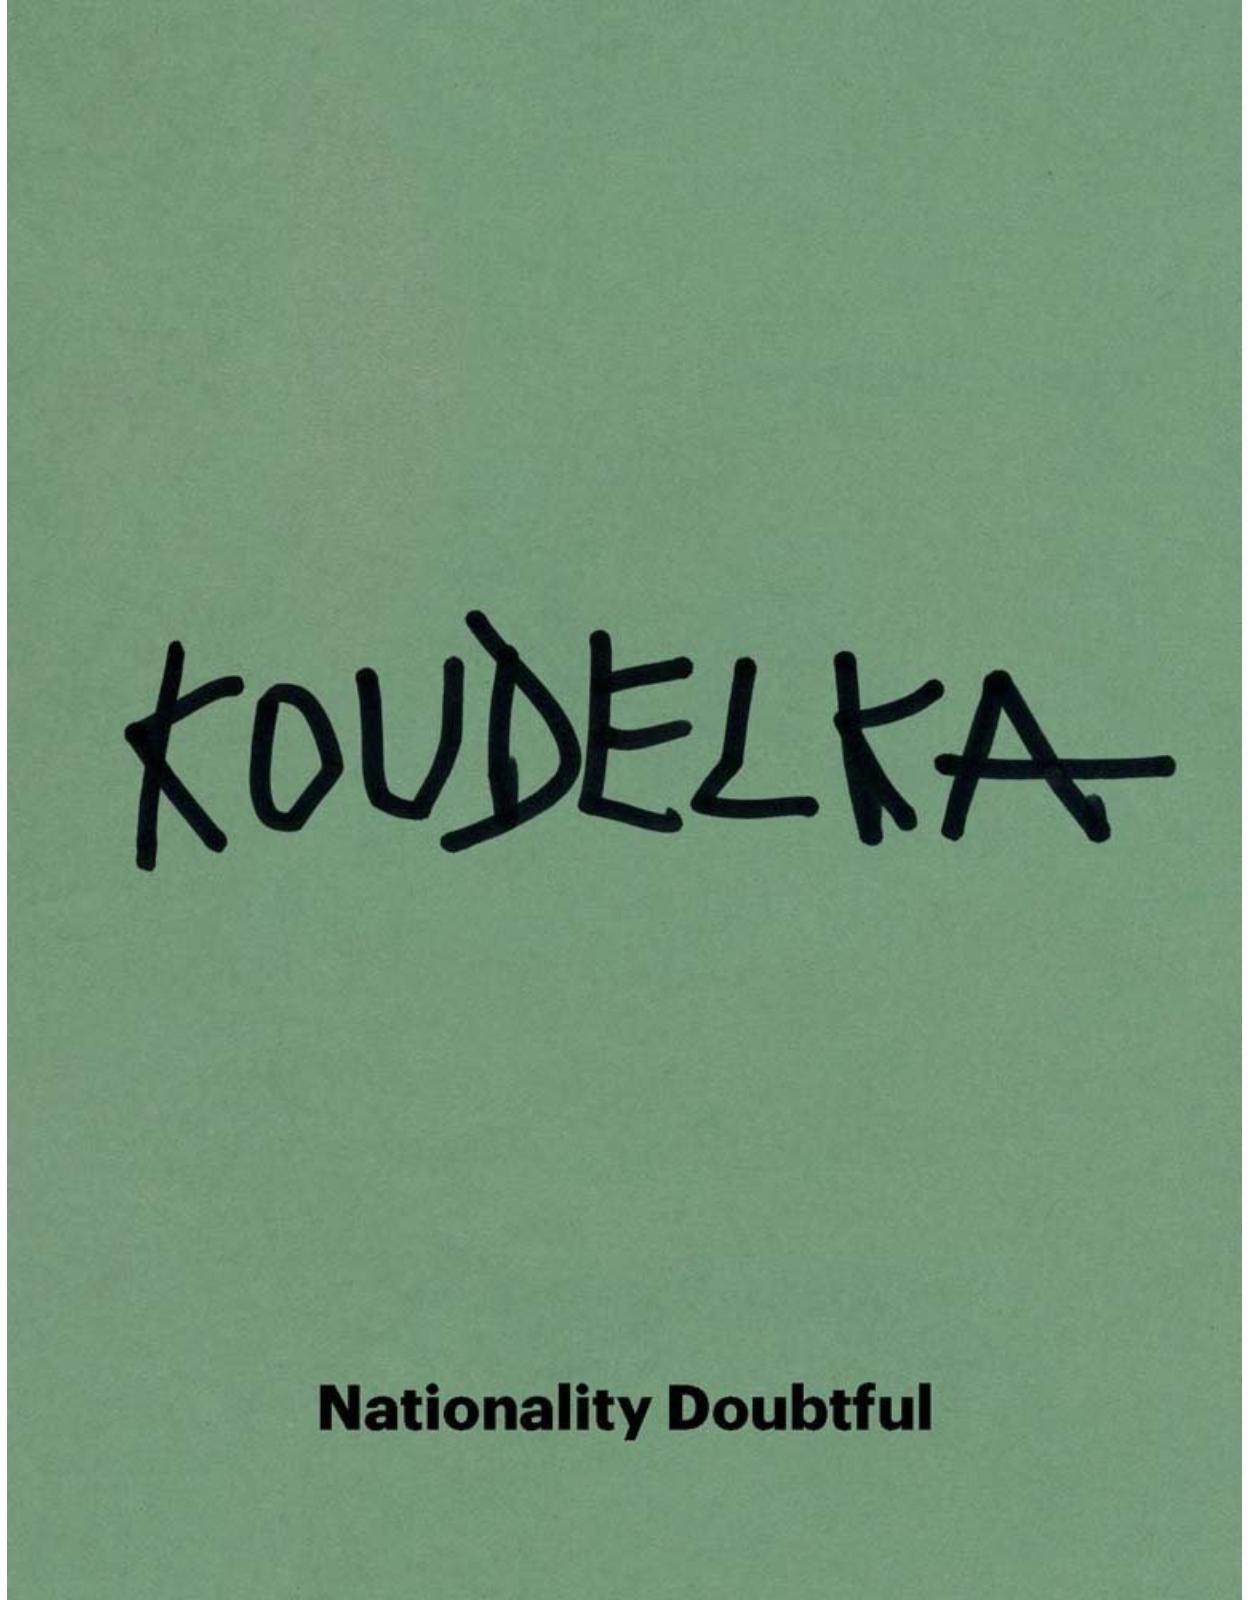 Josef Koudelka.